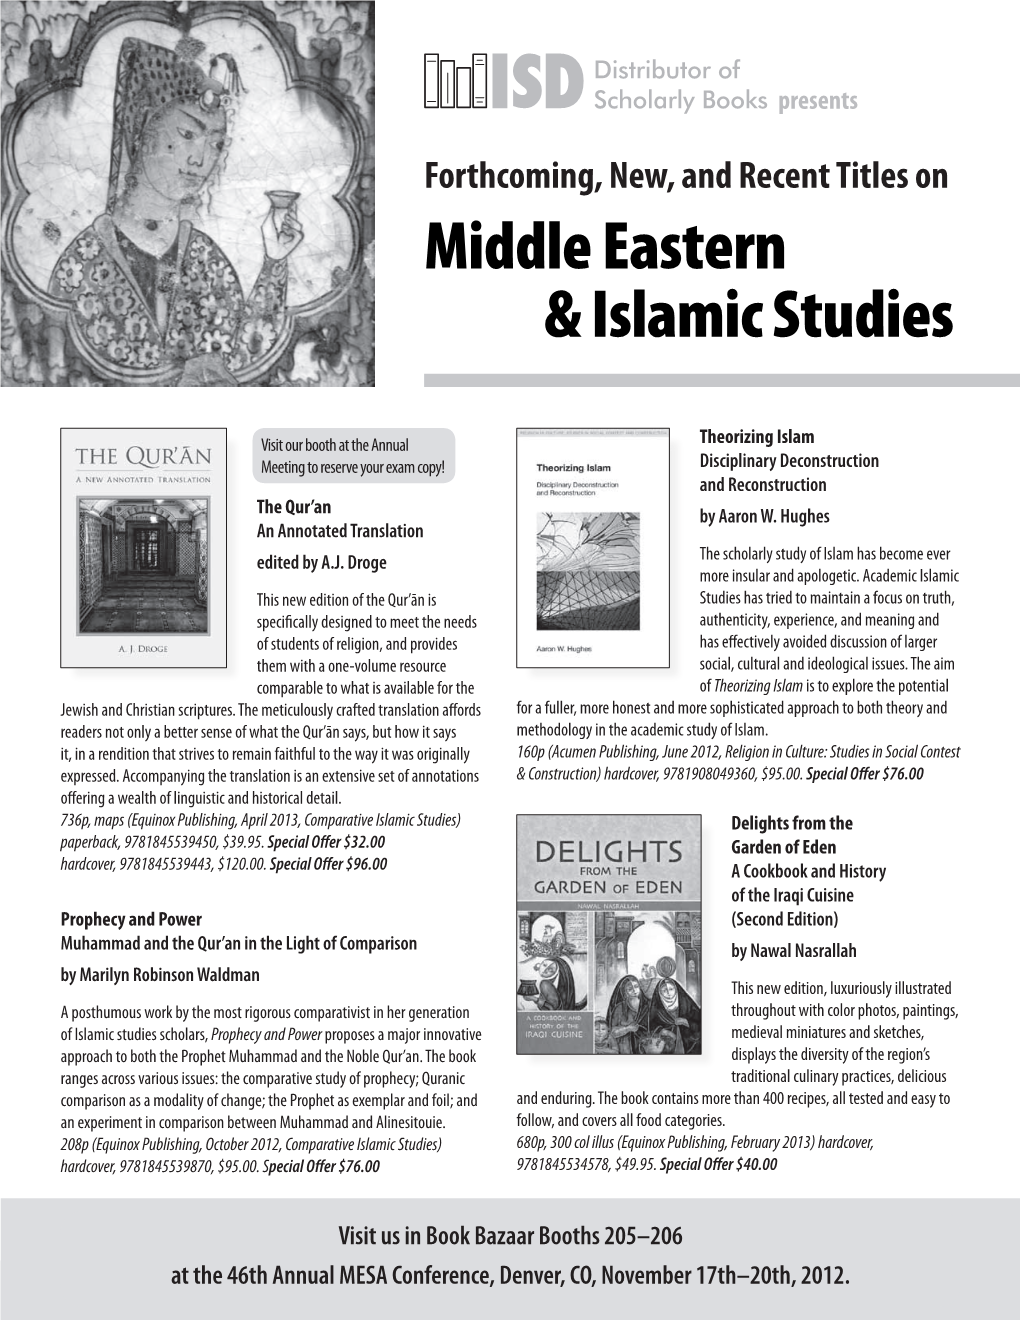 Middle Eastern & Islamic Studies